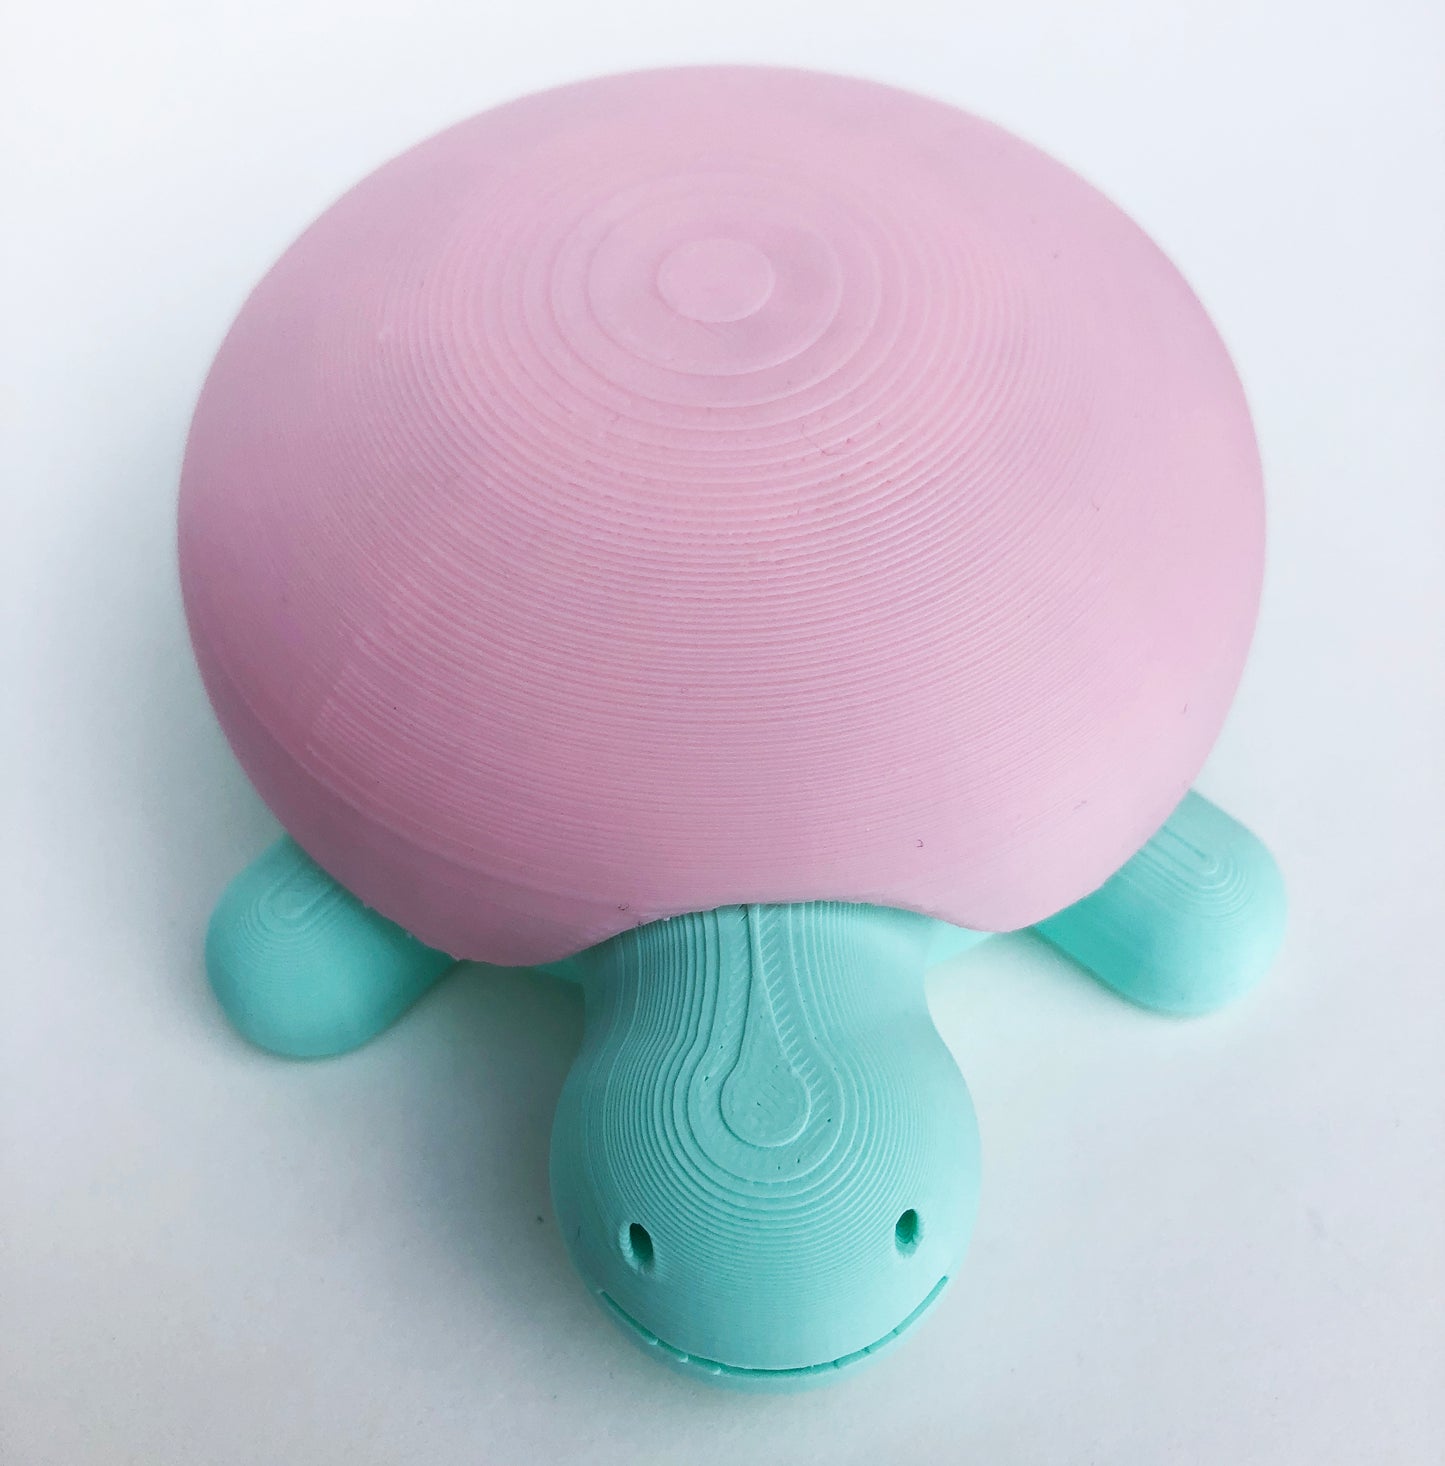 Carey Desktop Sandbox Turtle in Pastel with Sand Slime